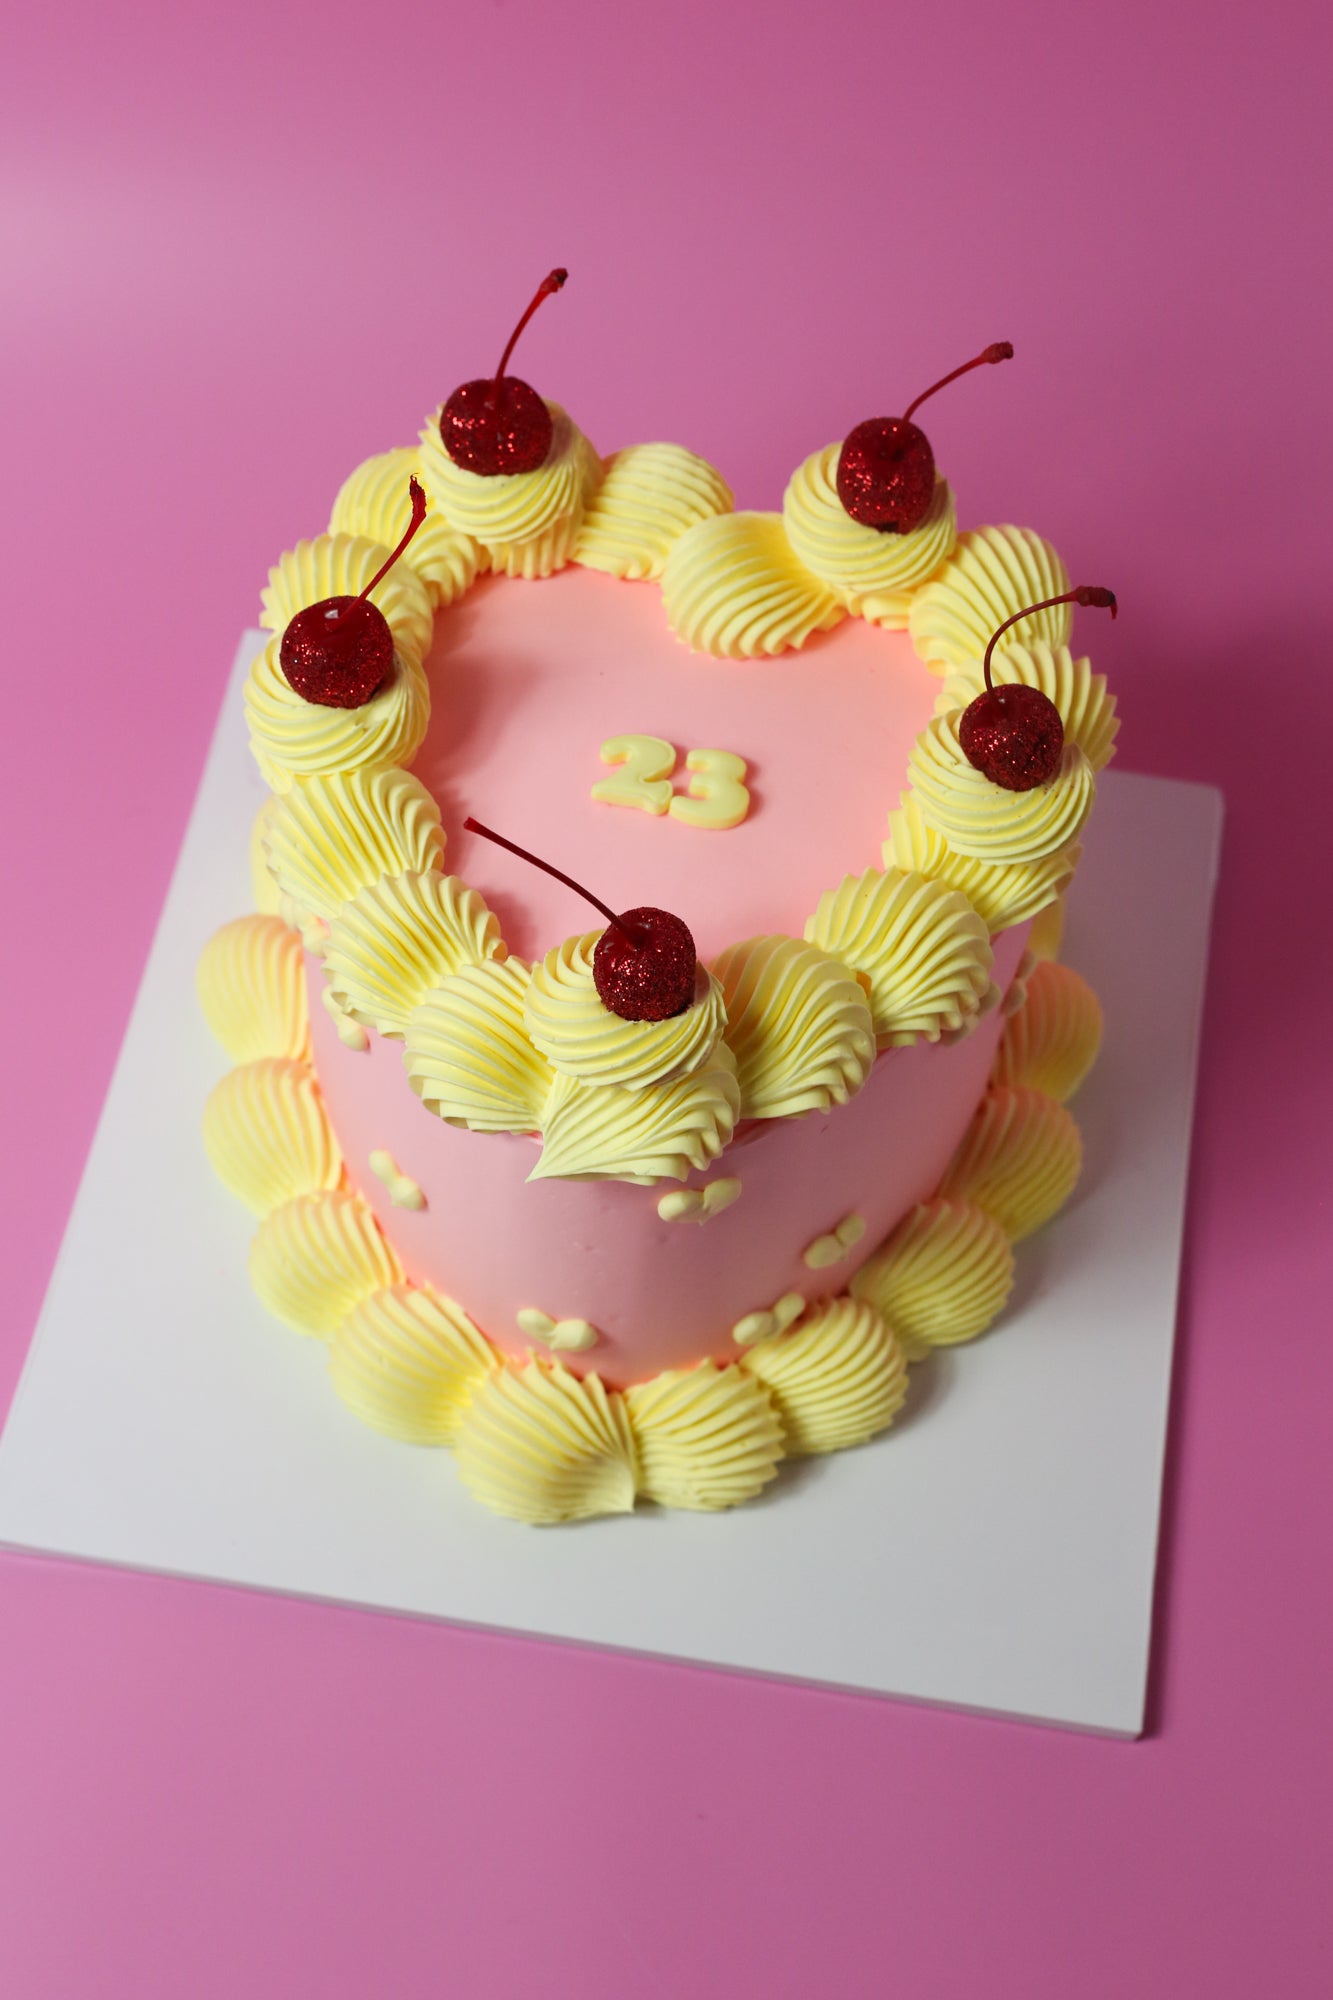 Heart Cakes - Retro Style